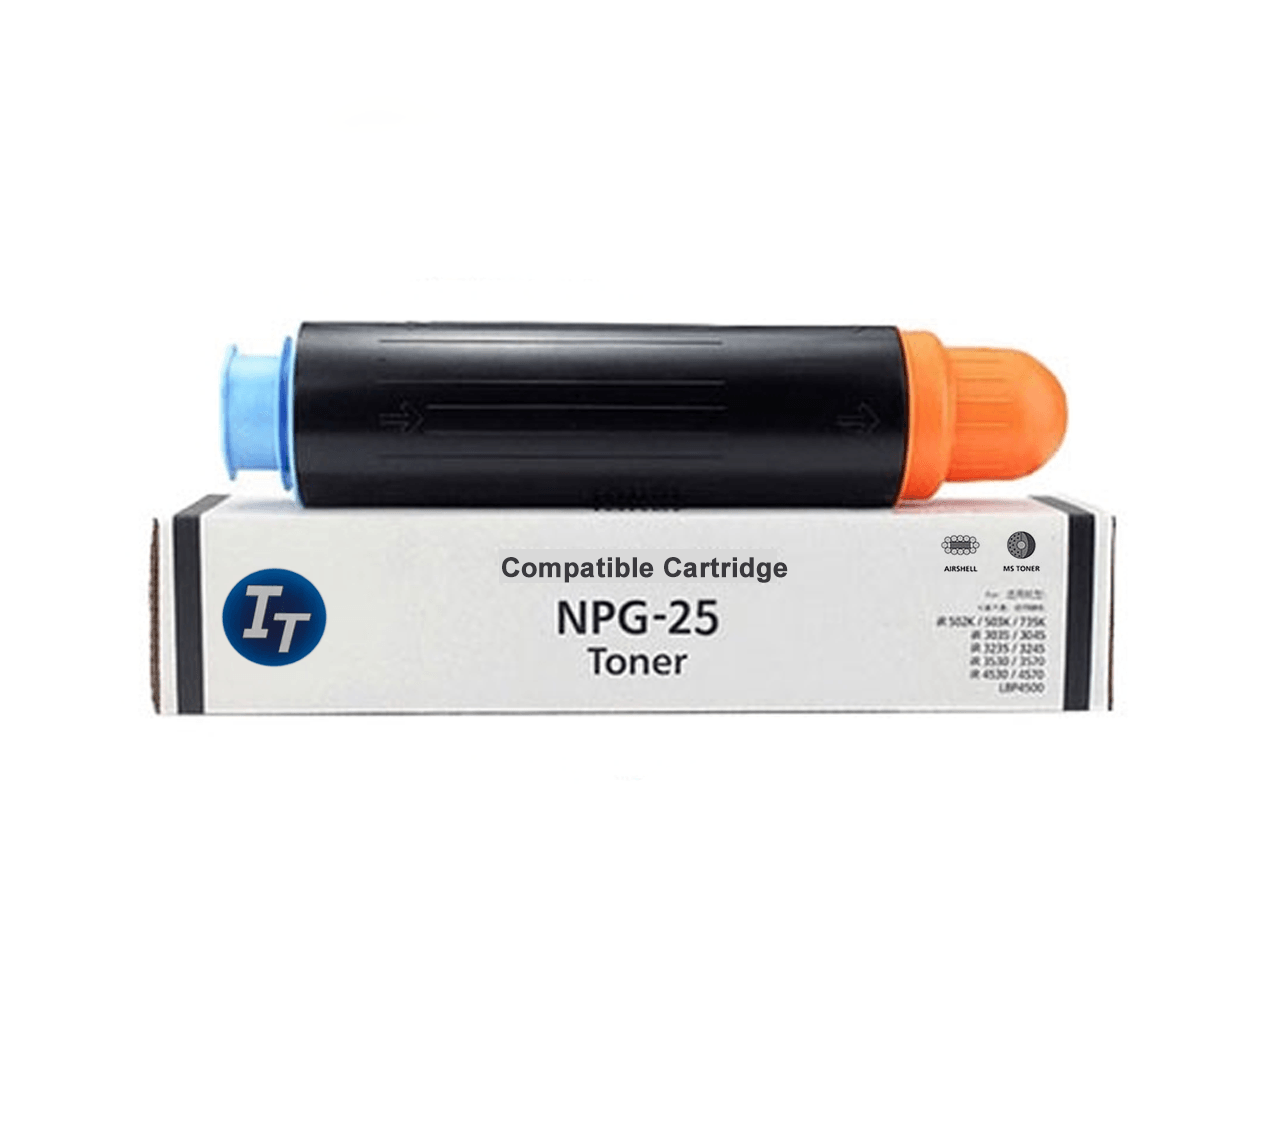 IT Toner Compatible Cartridge NPG-25 (4).png